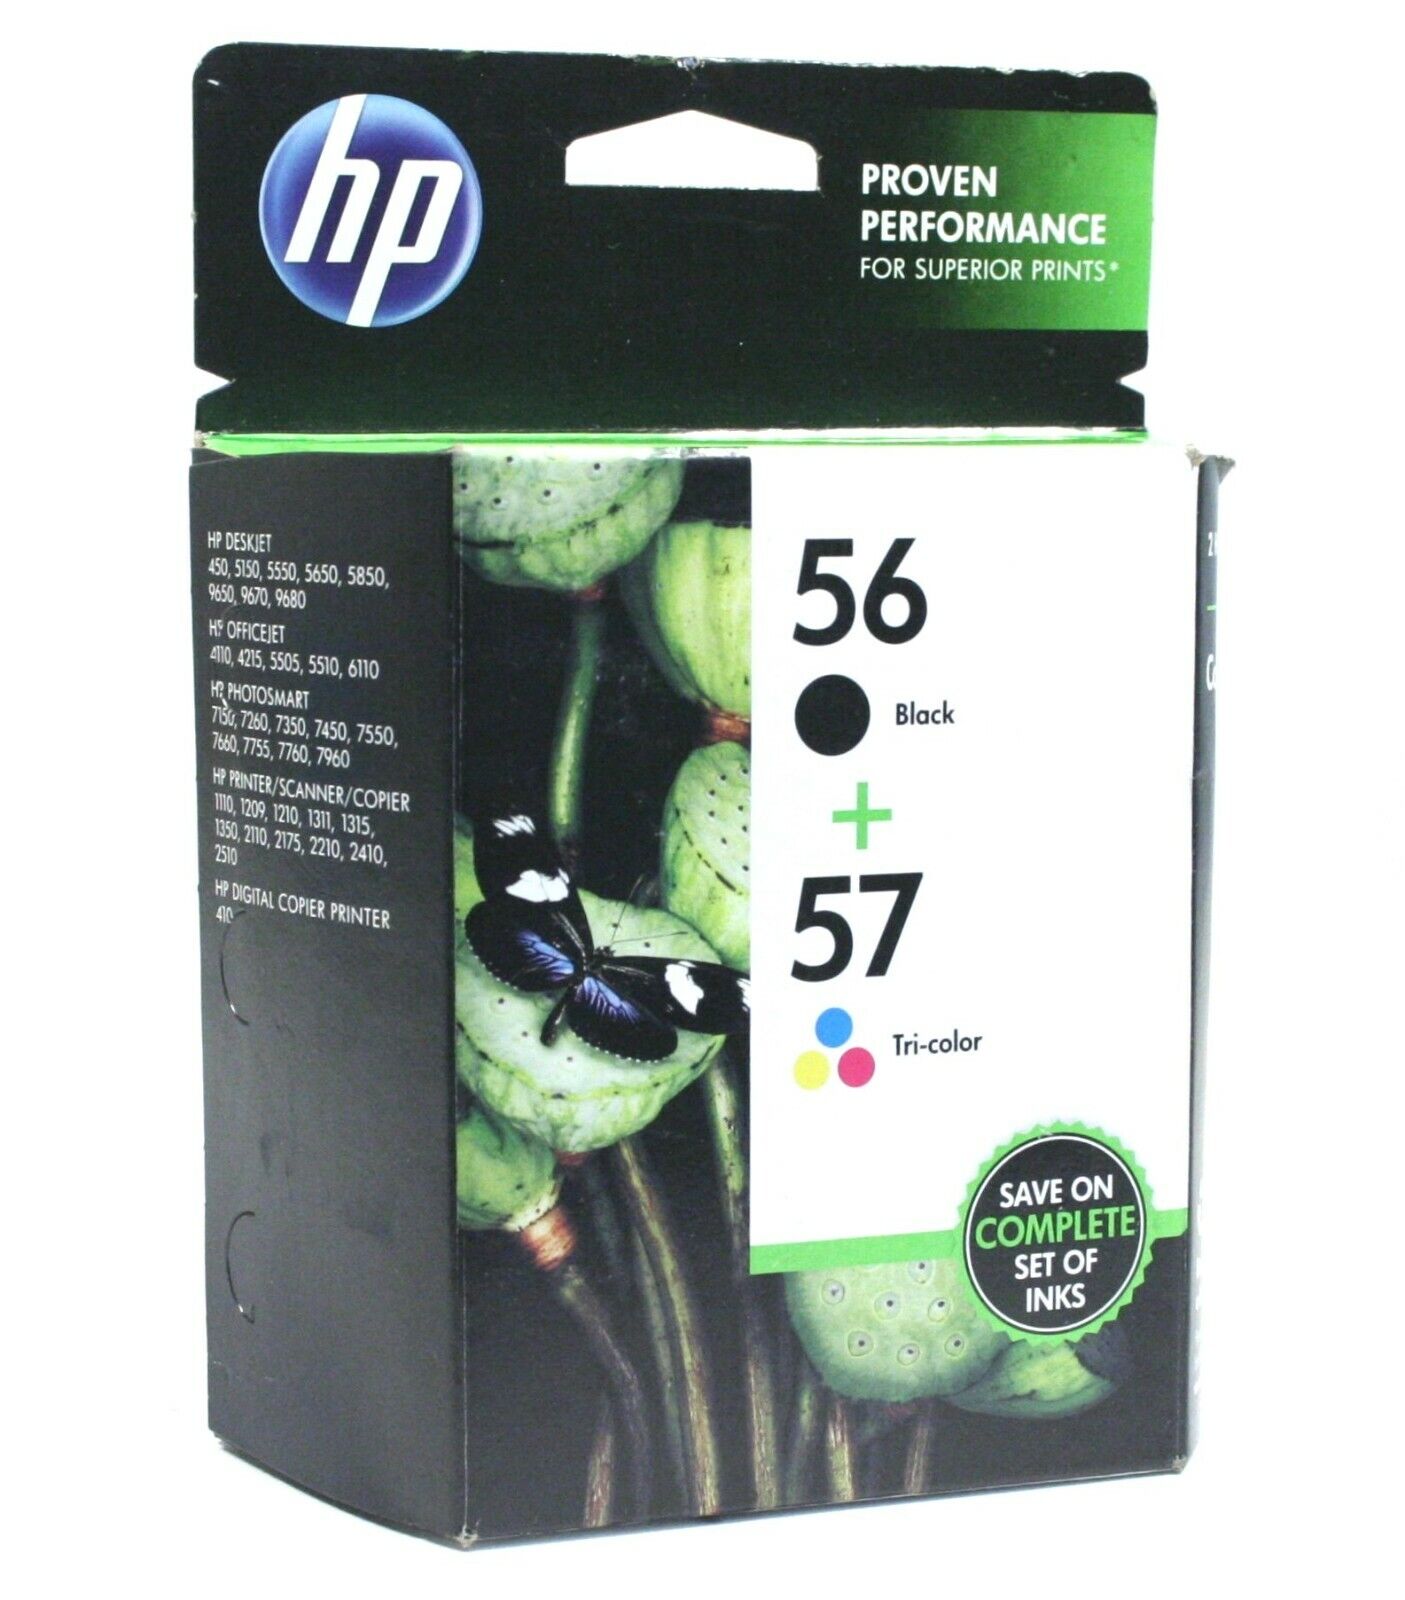 2PK Genuine HP 56 HP 57 Ink Cartridge for DeskJet 450 5150 5550 5650 EXP DATE